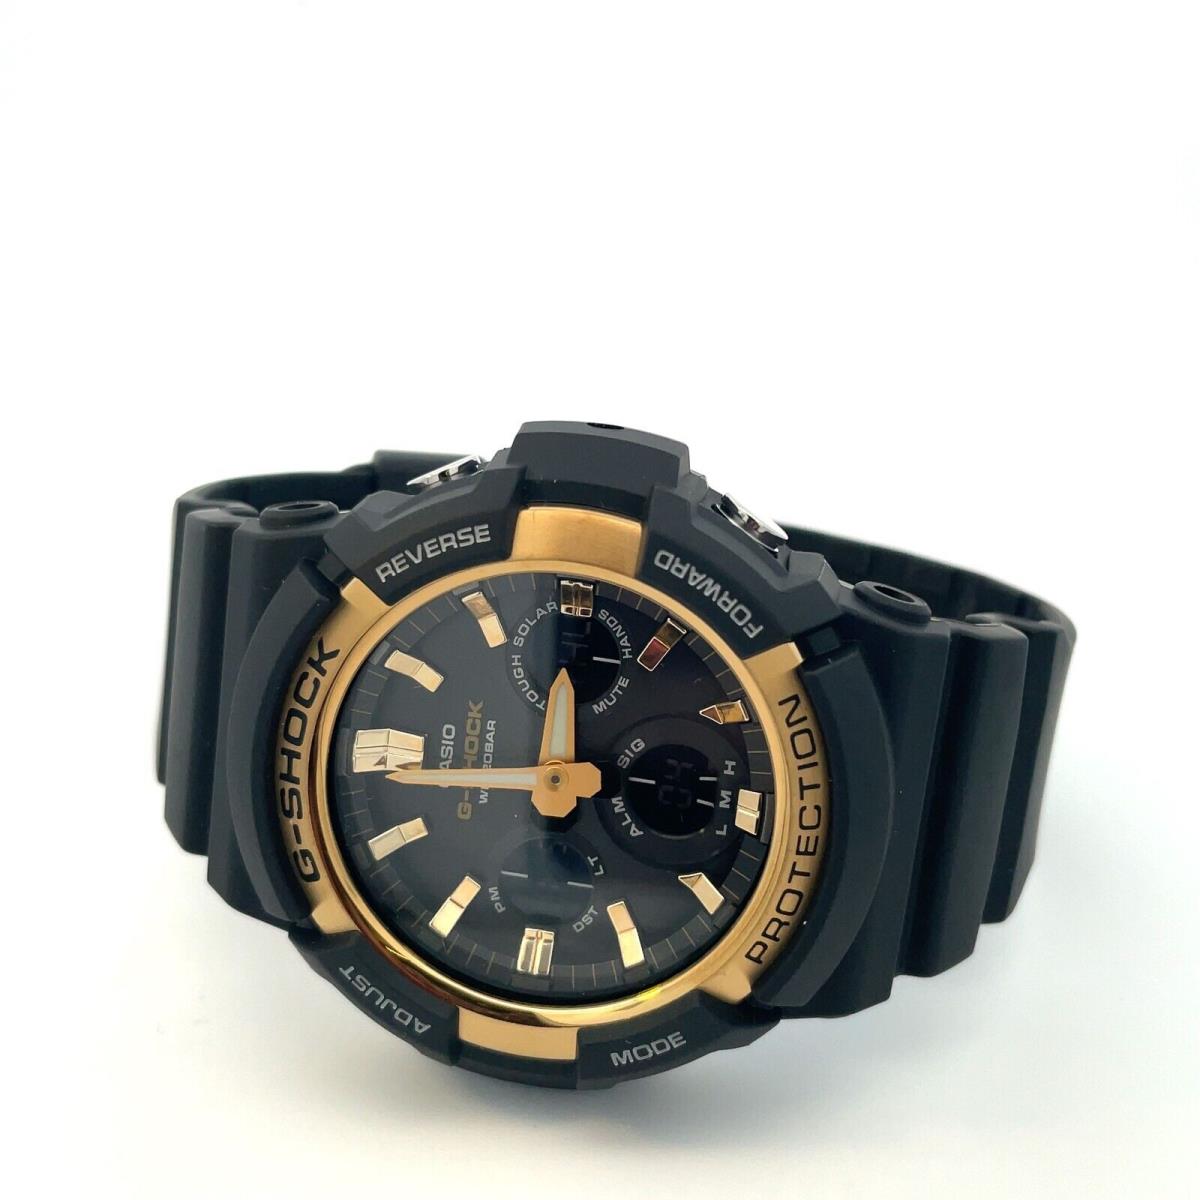 Casio G-shock GAS100G-1A Wrist Watch For Men